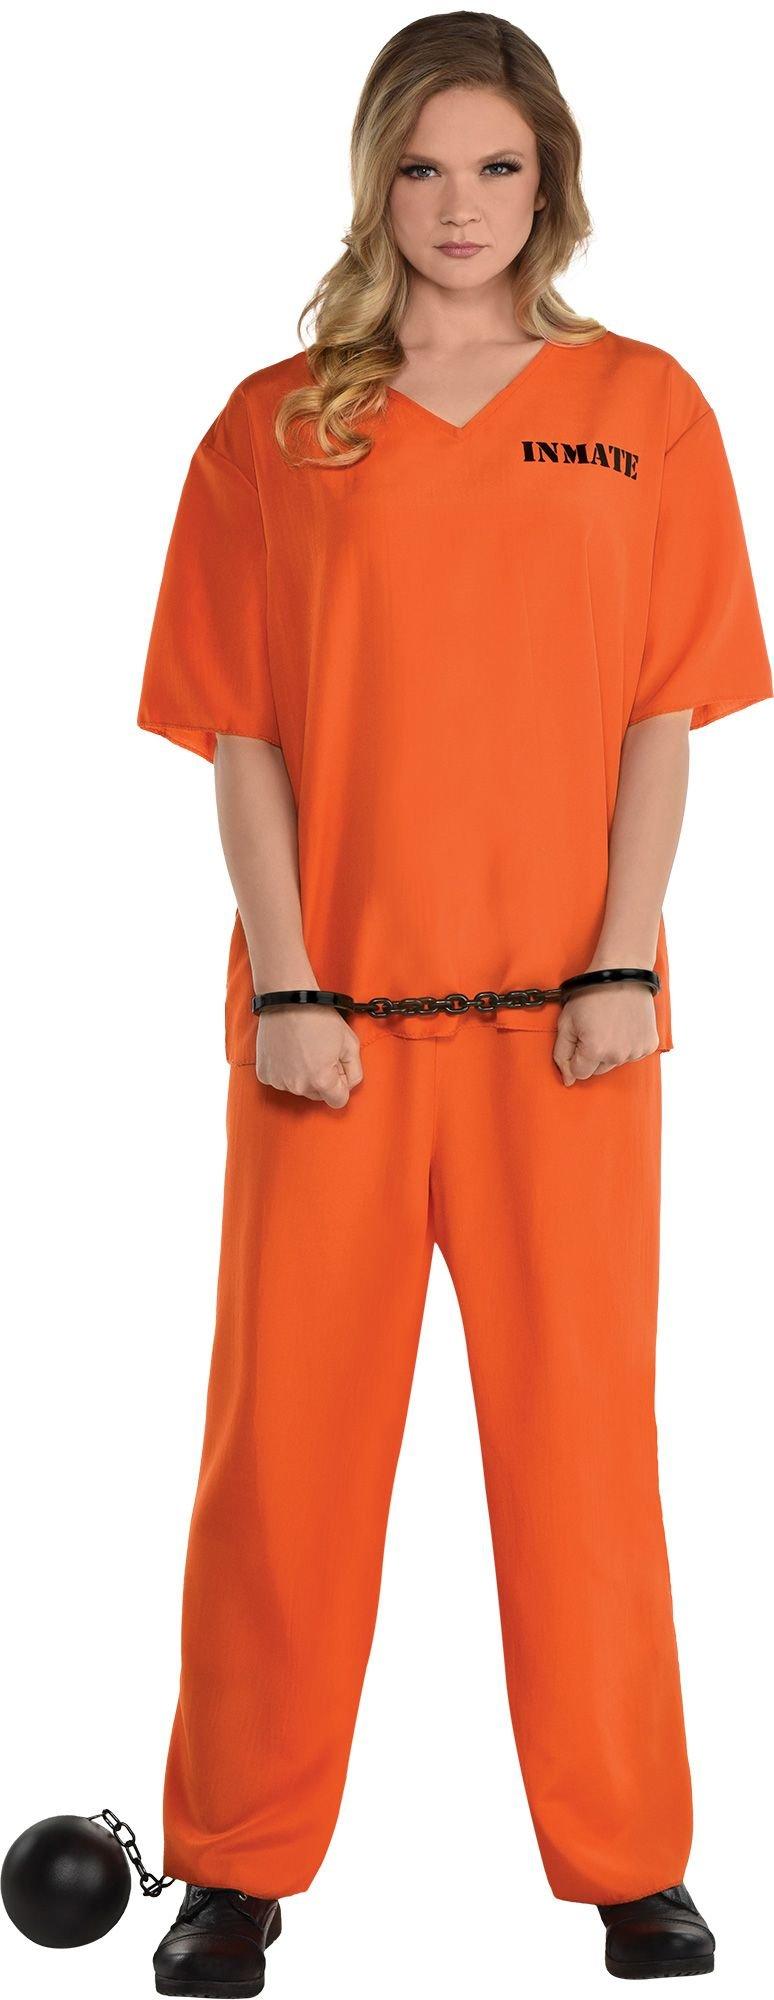 Women's Orange Prisoner Costume | Party City